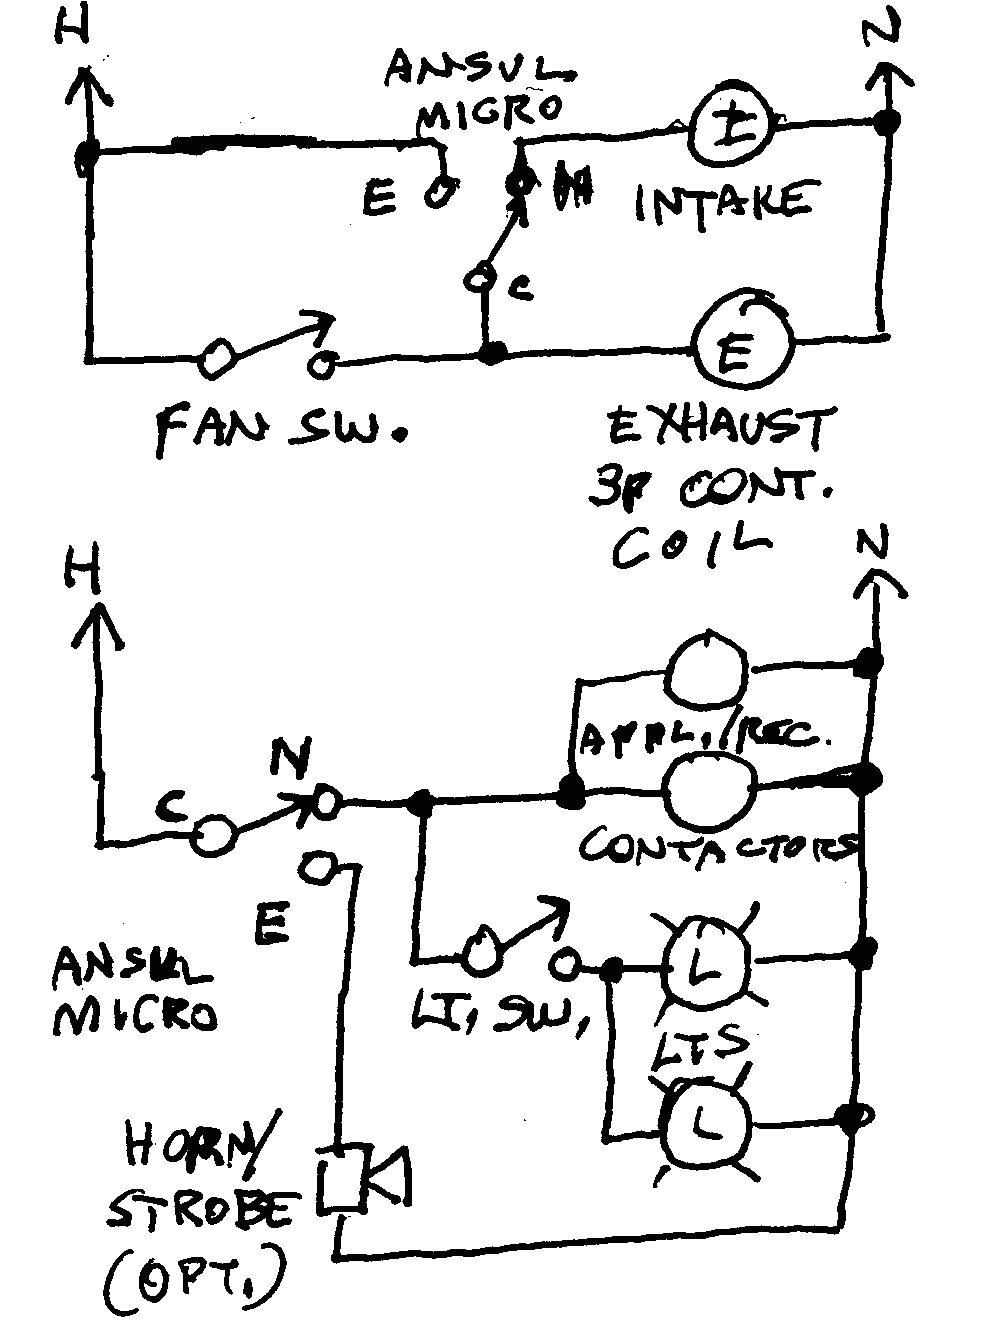 fire suppression wiring diagram wiring diagram useransul wiring diagram wiring diagram for you chubb fire suppression